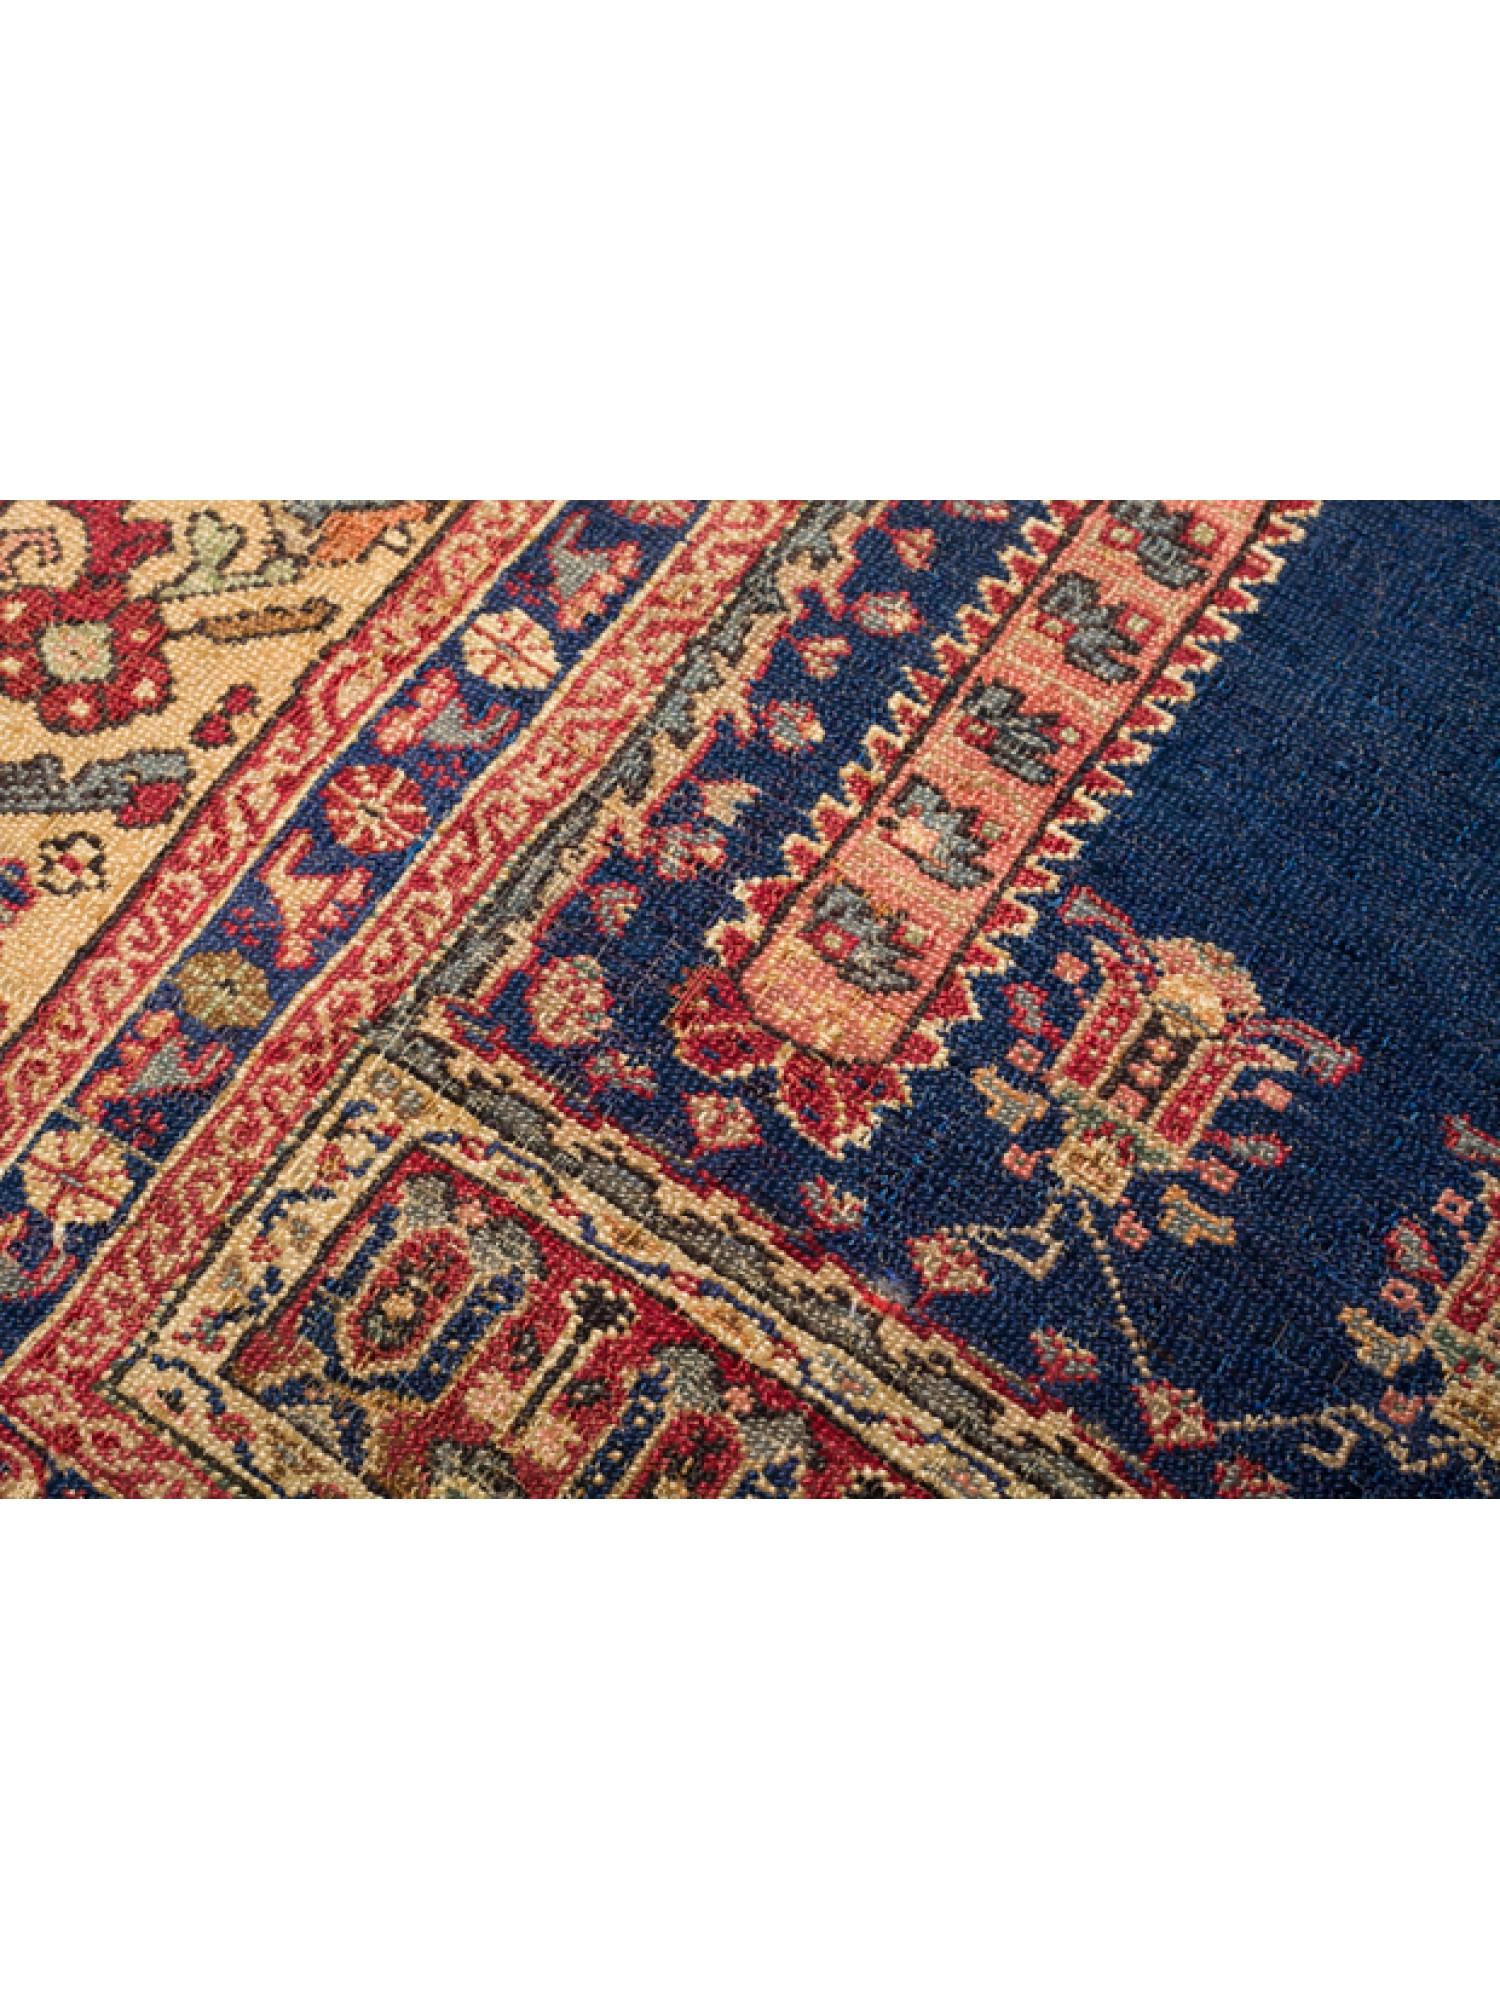 Hand-Woven Antique Kula Prayer Rug Western Anatolian Turkish Mihrab Carpet Rare Design For Sale